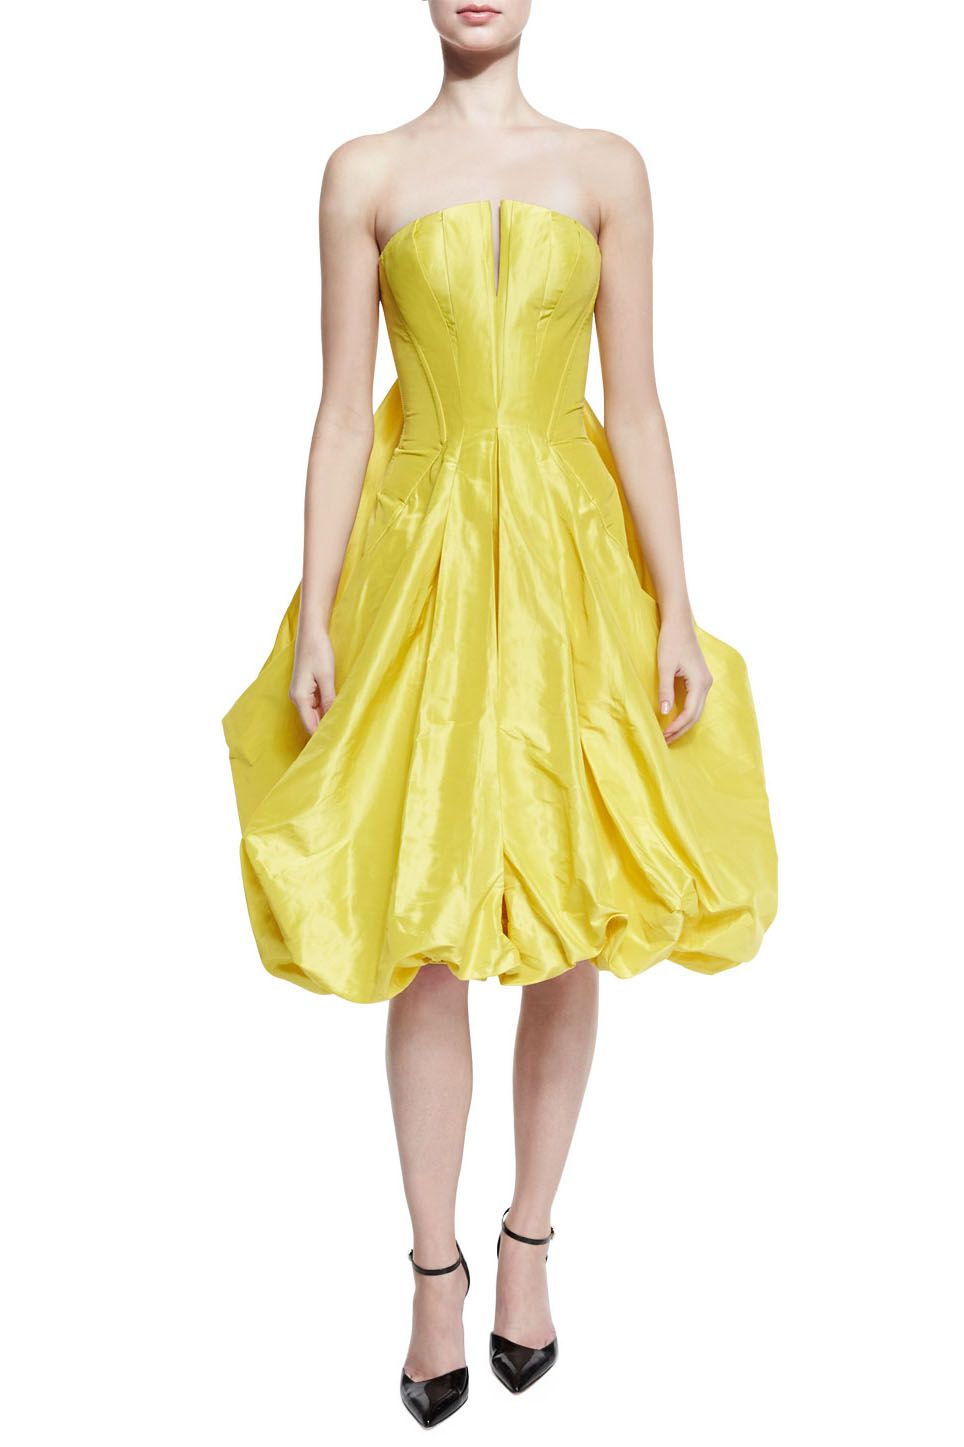 Zac Posen Bubble-Skirt Cocktail Dress, $3,990